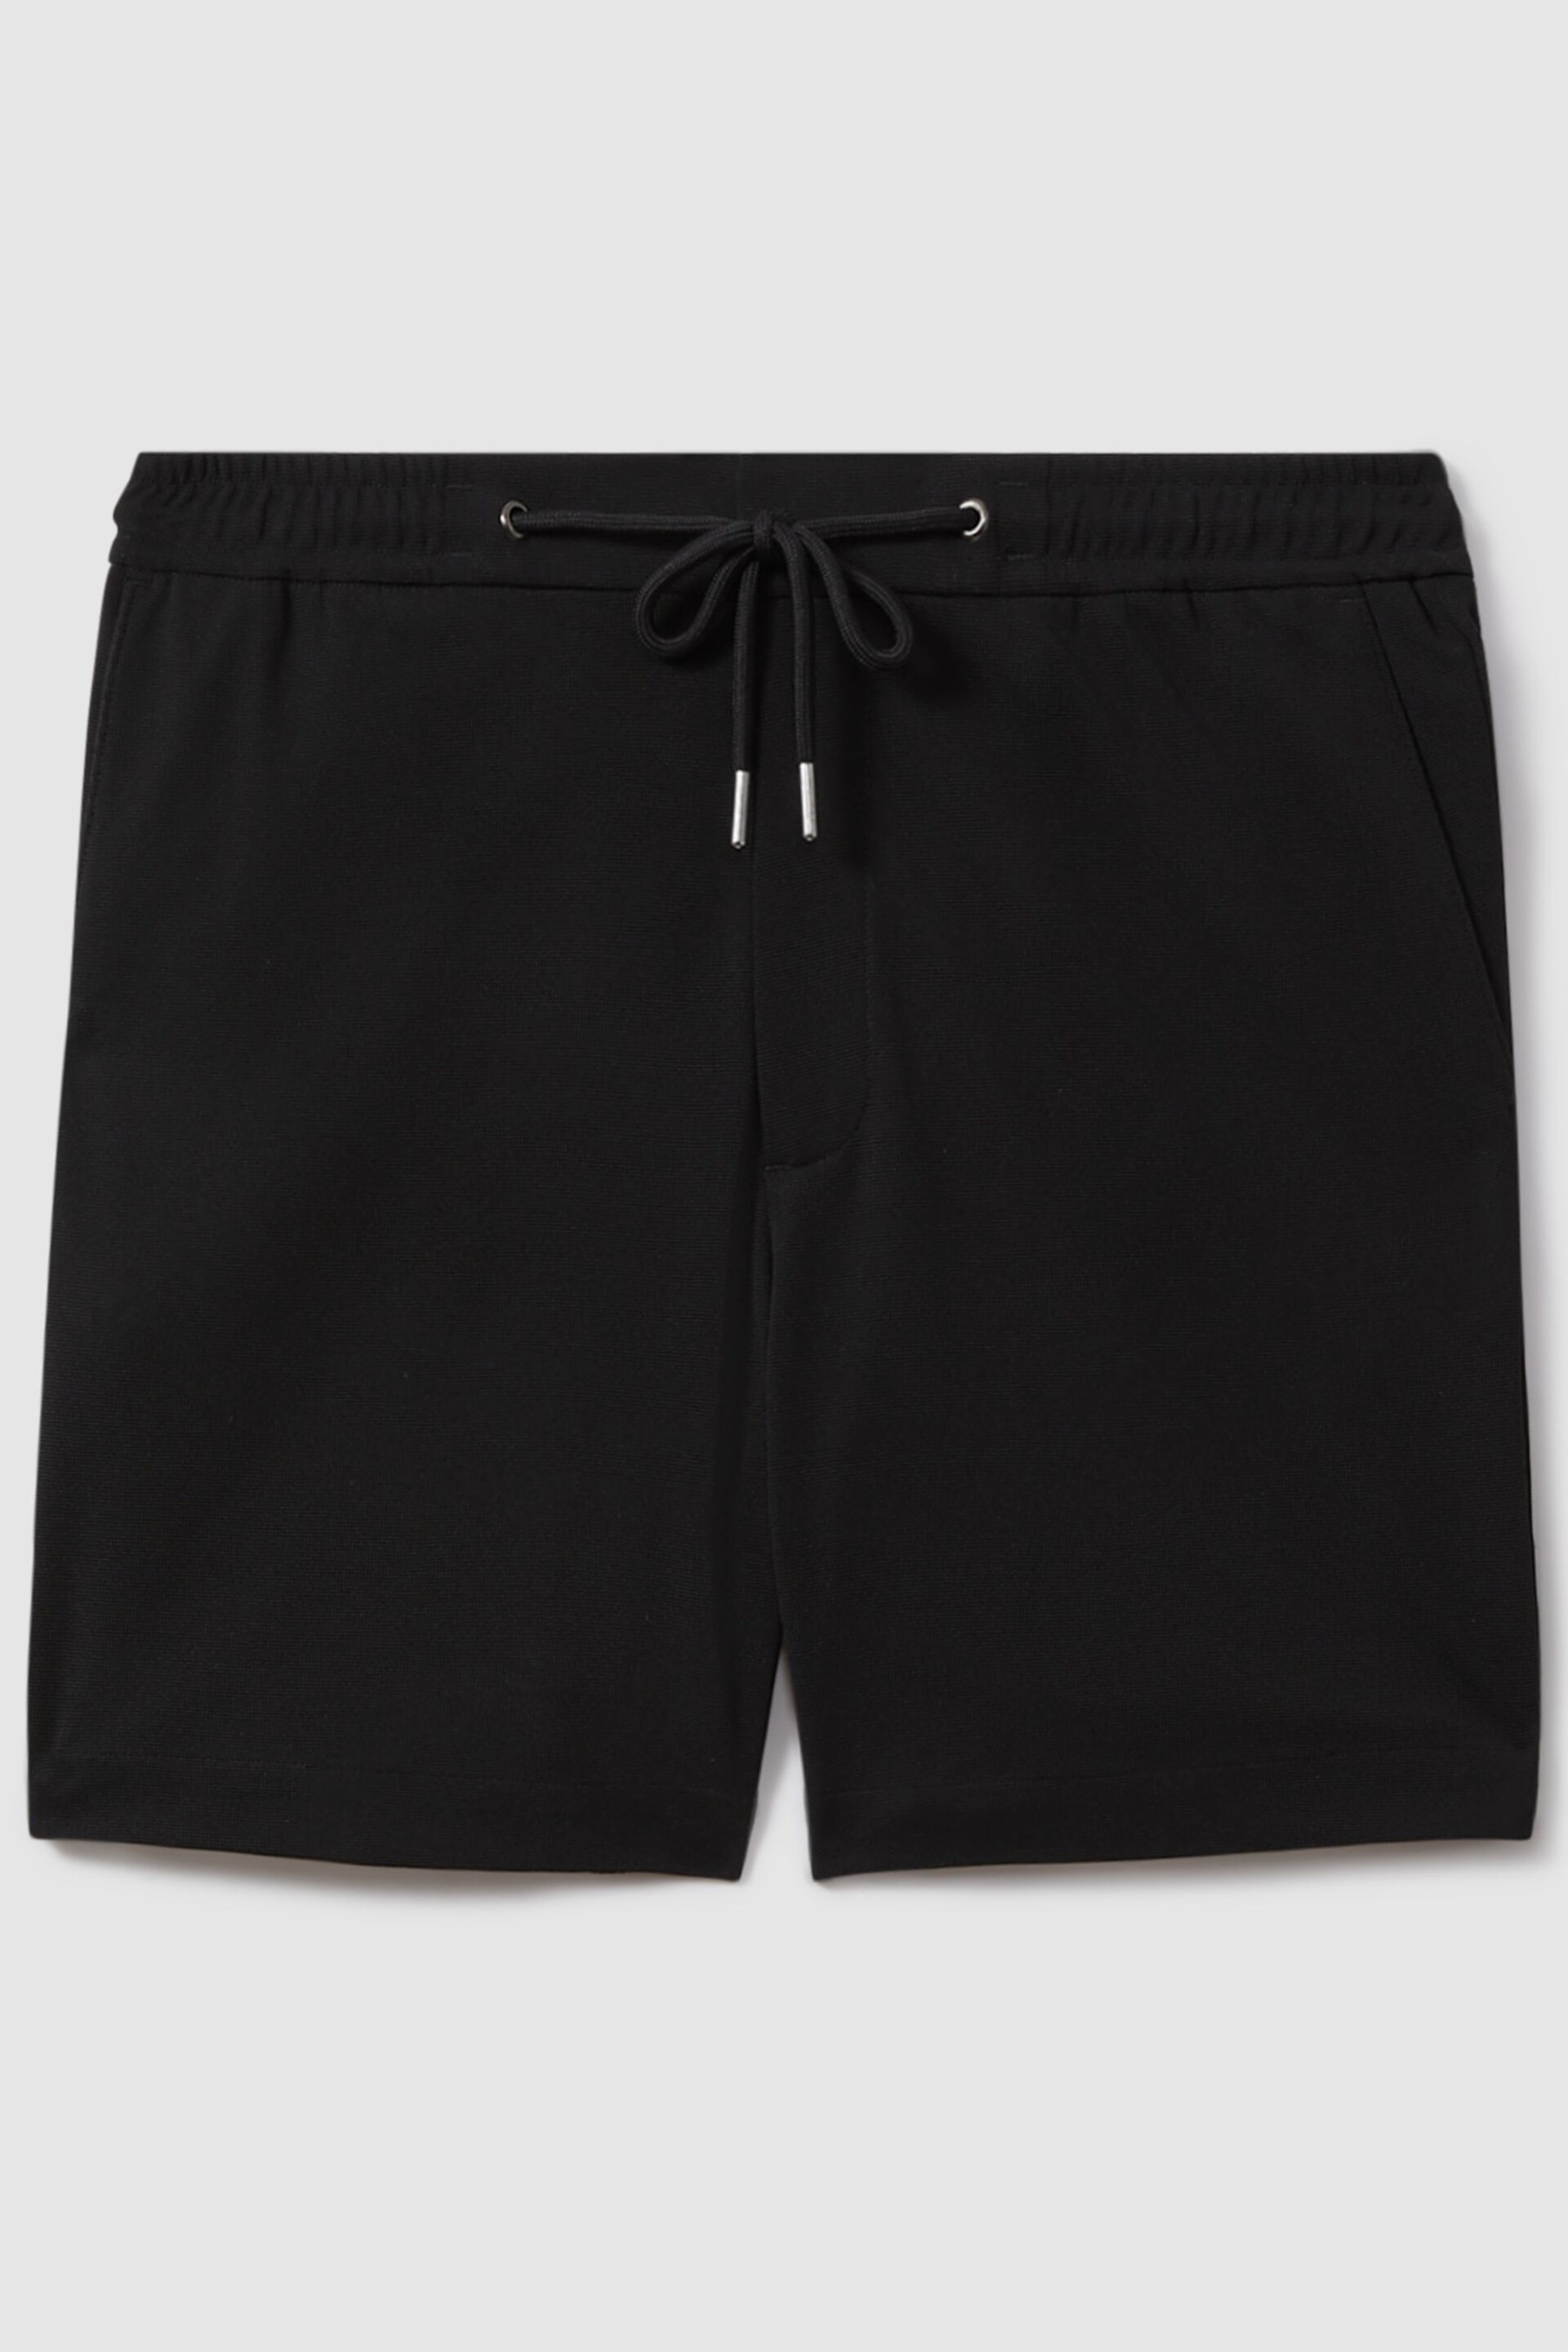 Reiss Black Newmark Textured Drawstring Shorts - Image 2 of 6